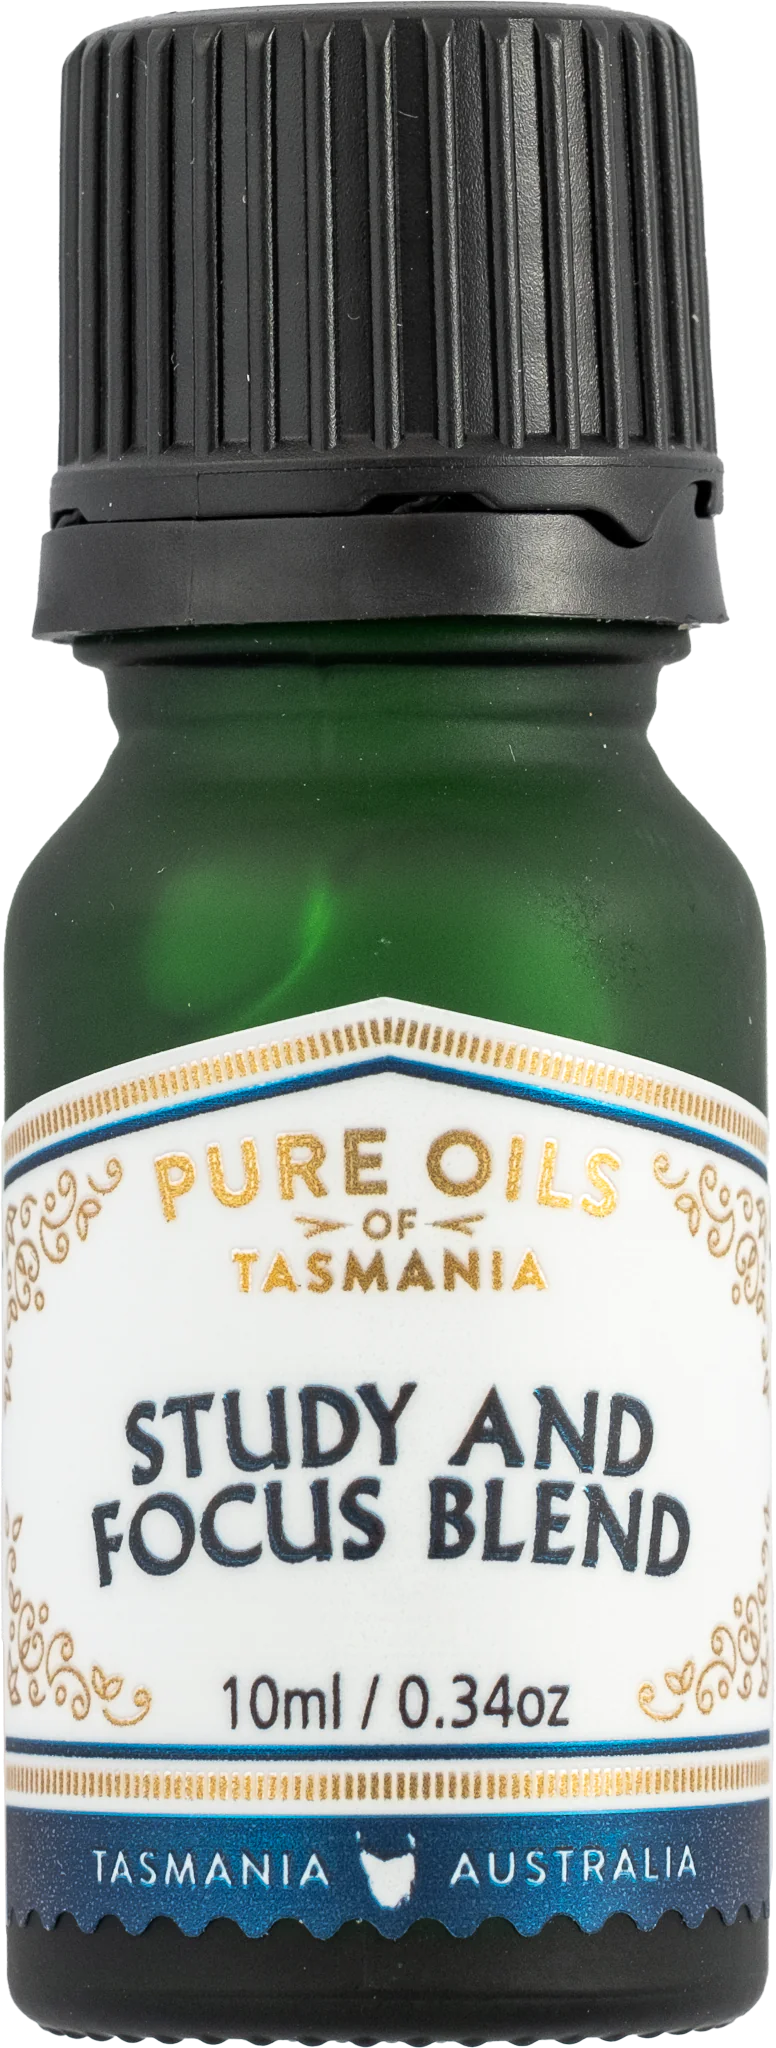 Pure Oil Blends - Pure Oils of Tasmania Body pure oils tasmania Study & Focus Blend 